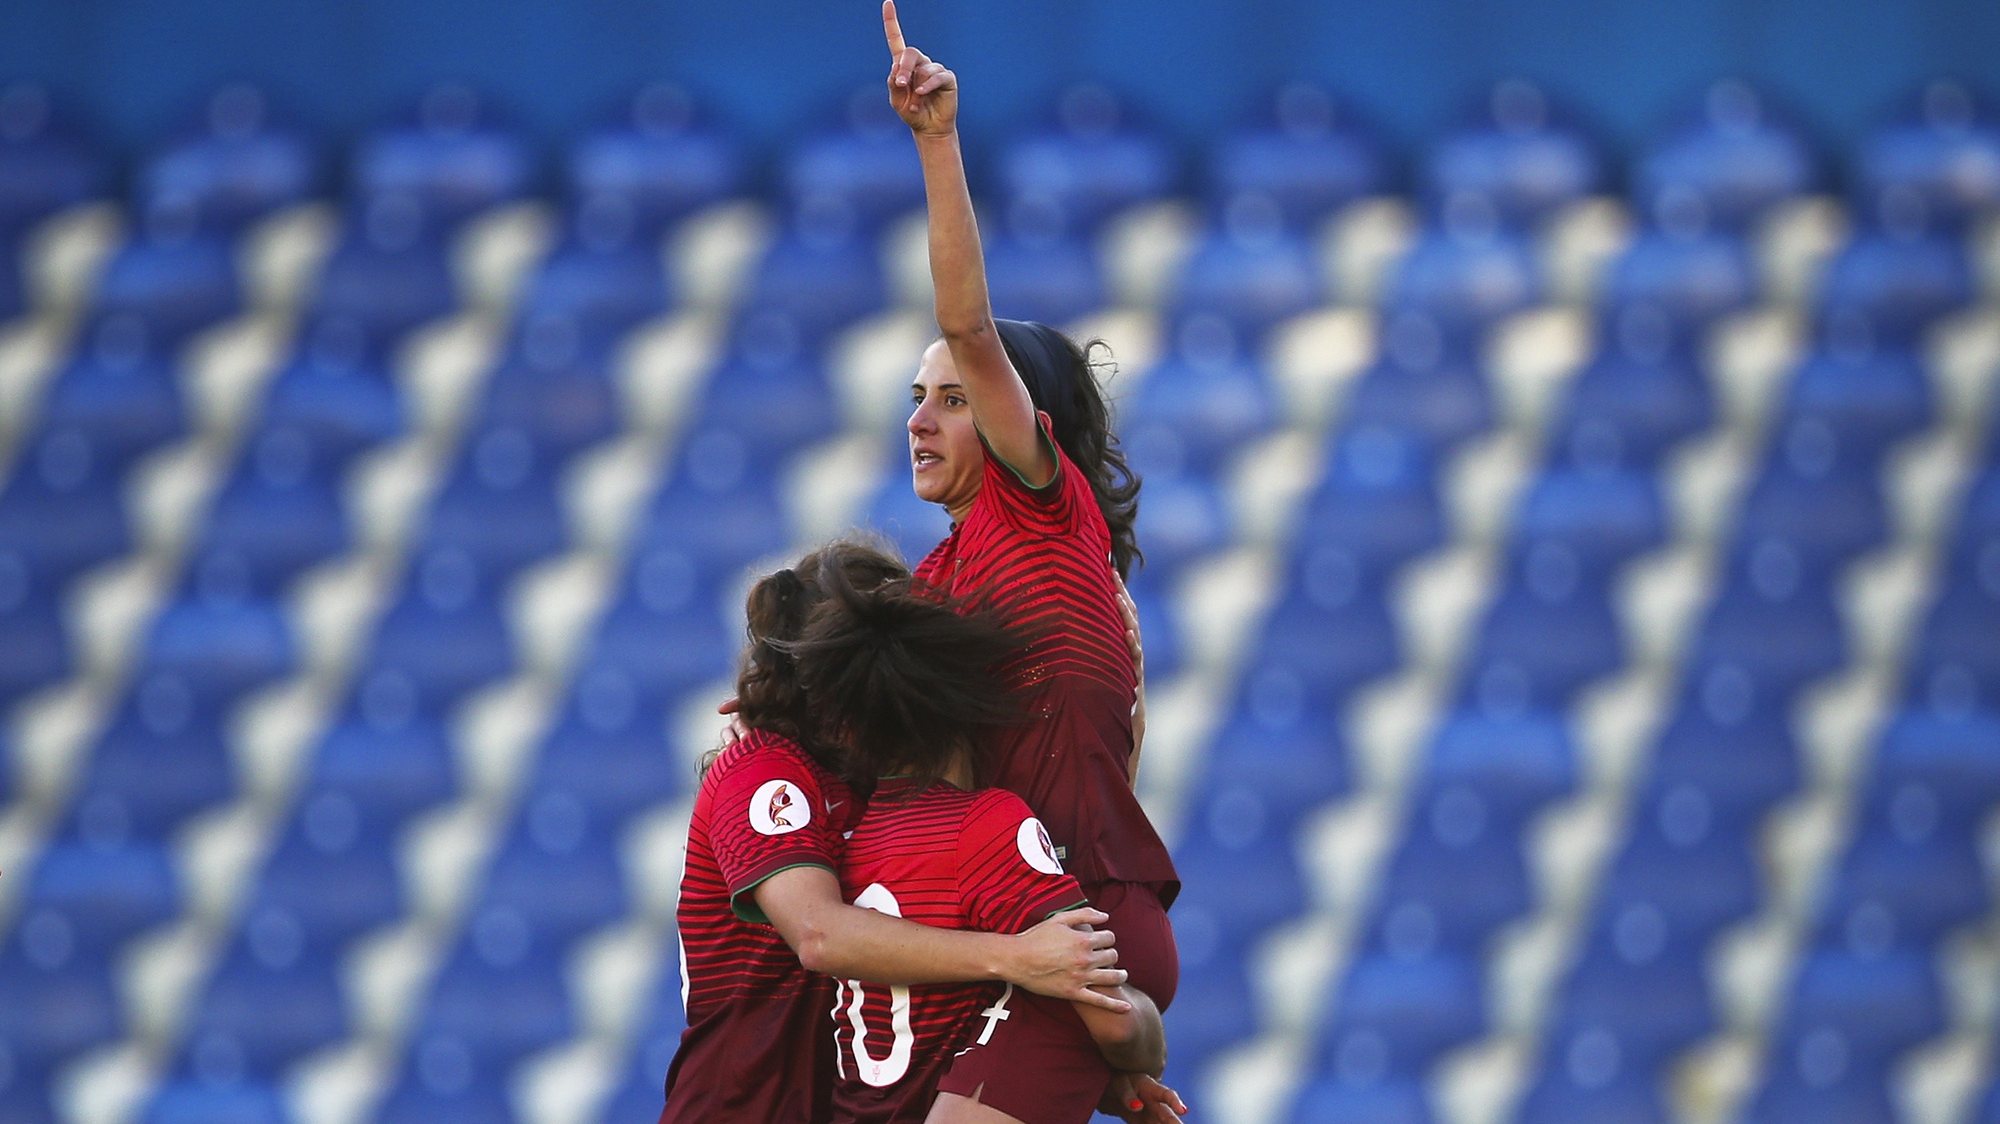 Portugal player Dolores Silva celebrates a goal against Montenegro during the Euro 2017 Group 2 qualifying match at Antonio Coimbra da Mota stadium in Estoril, Portugal,  26 November 2015. JOSE SENA GOULAO/LUSA